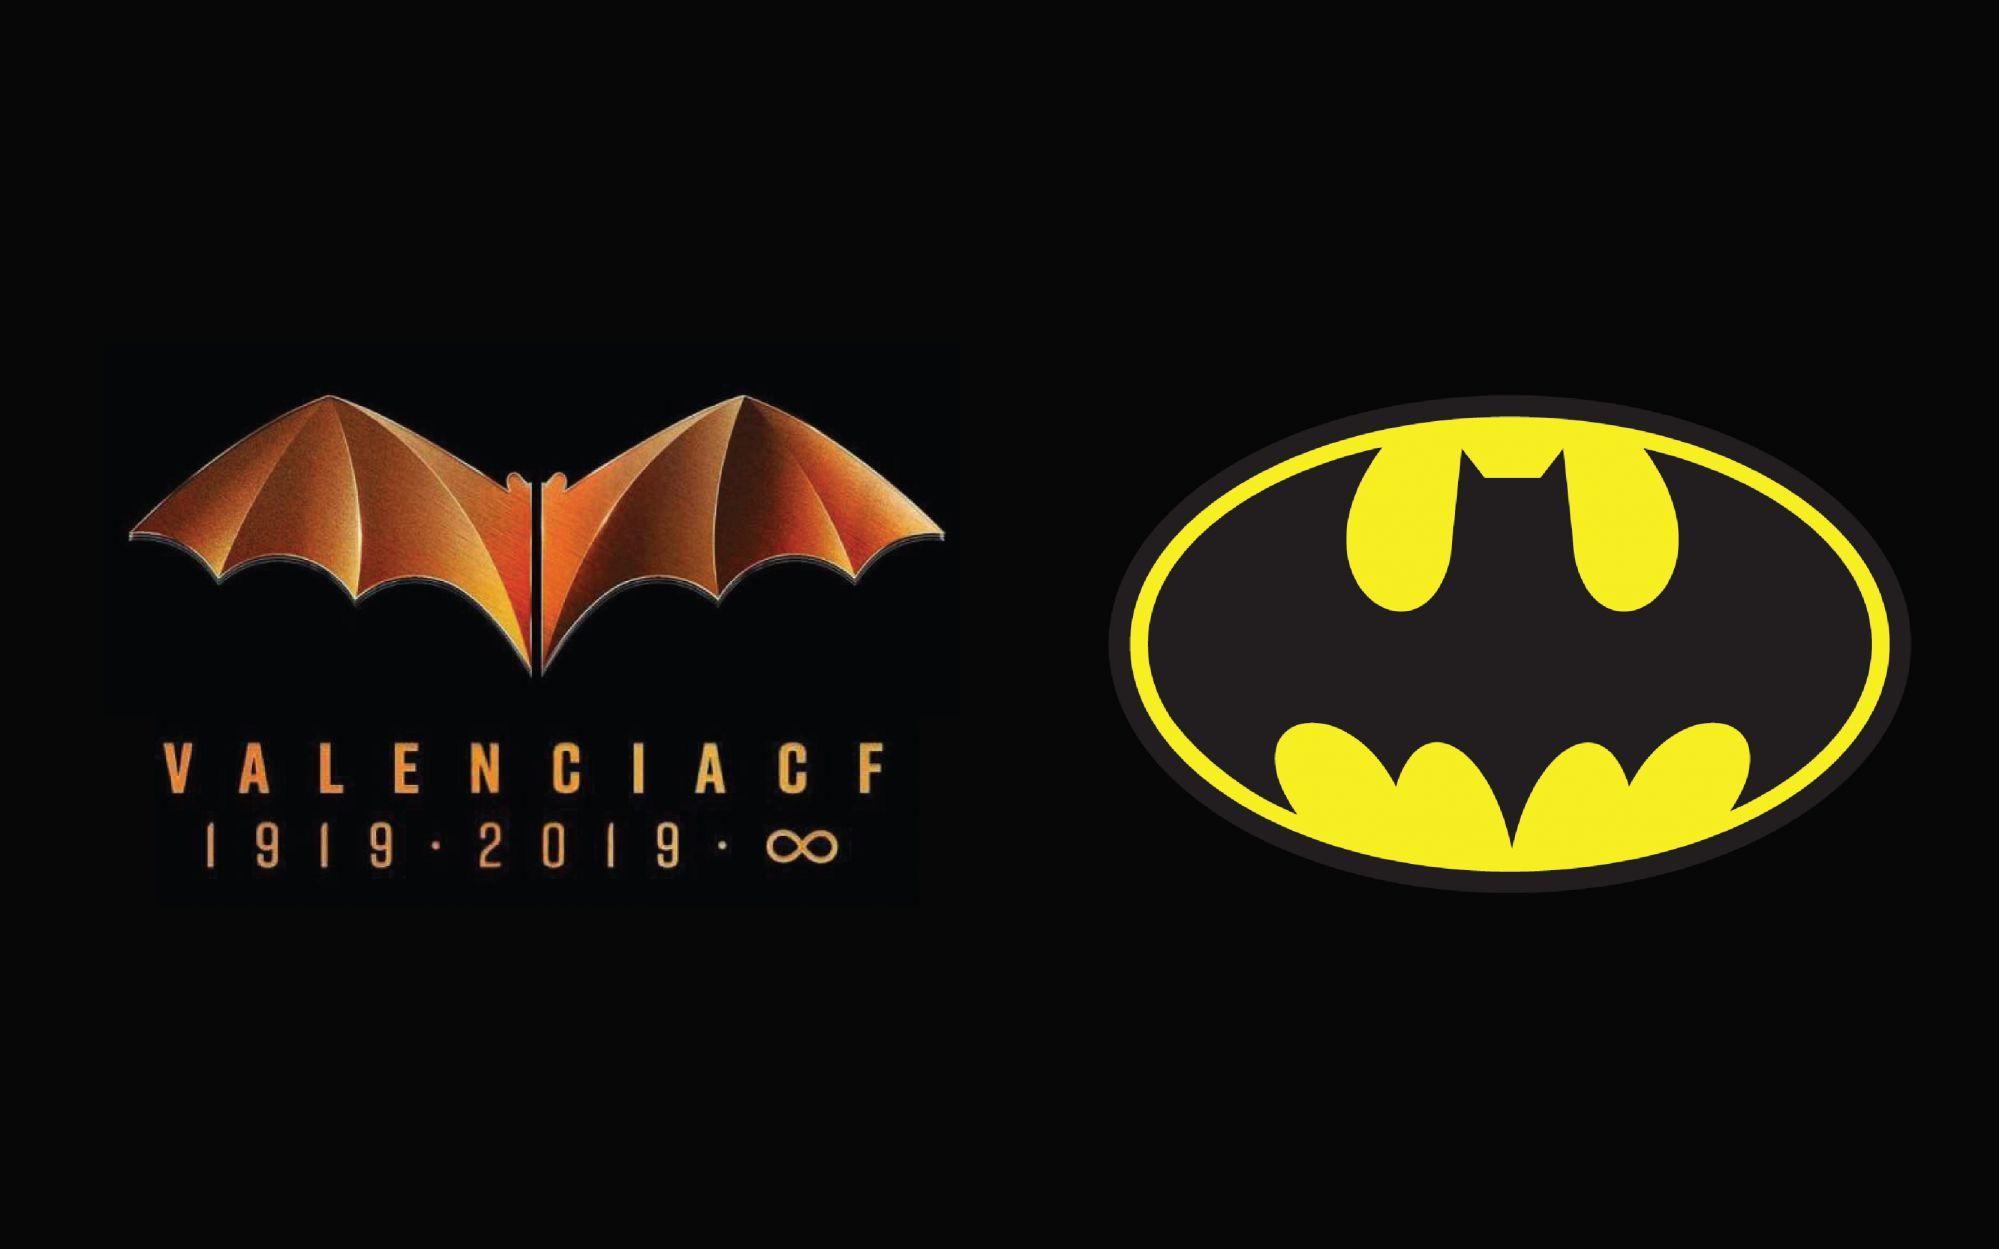 Valencia Logo - DC Comics complained against Valencia CF because of the logo